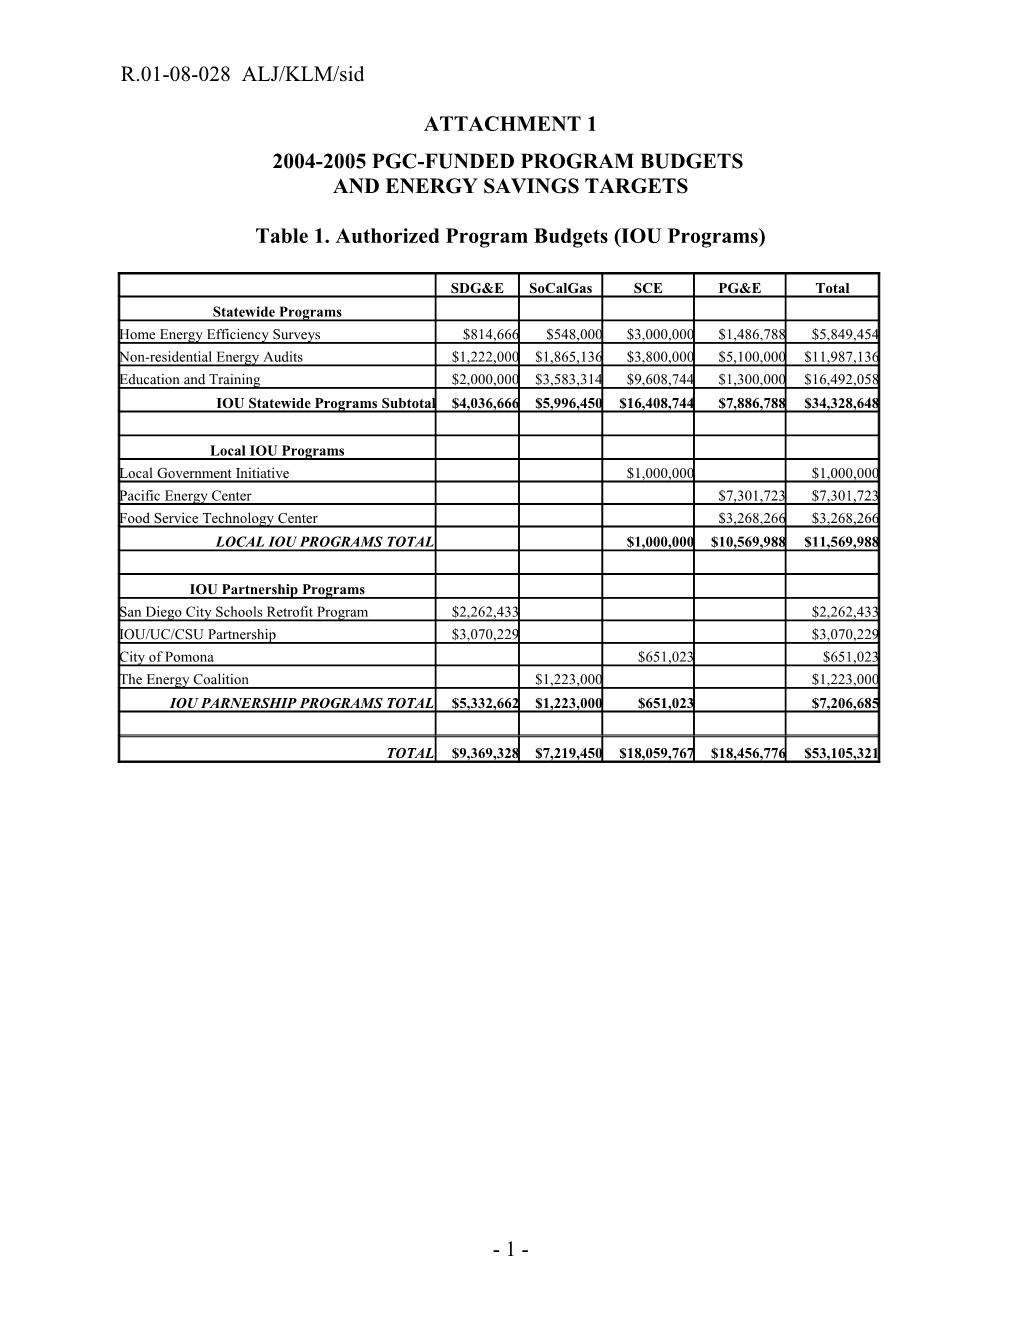 2004-2005 Pgc-Funded Program Budgets